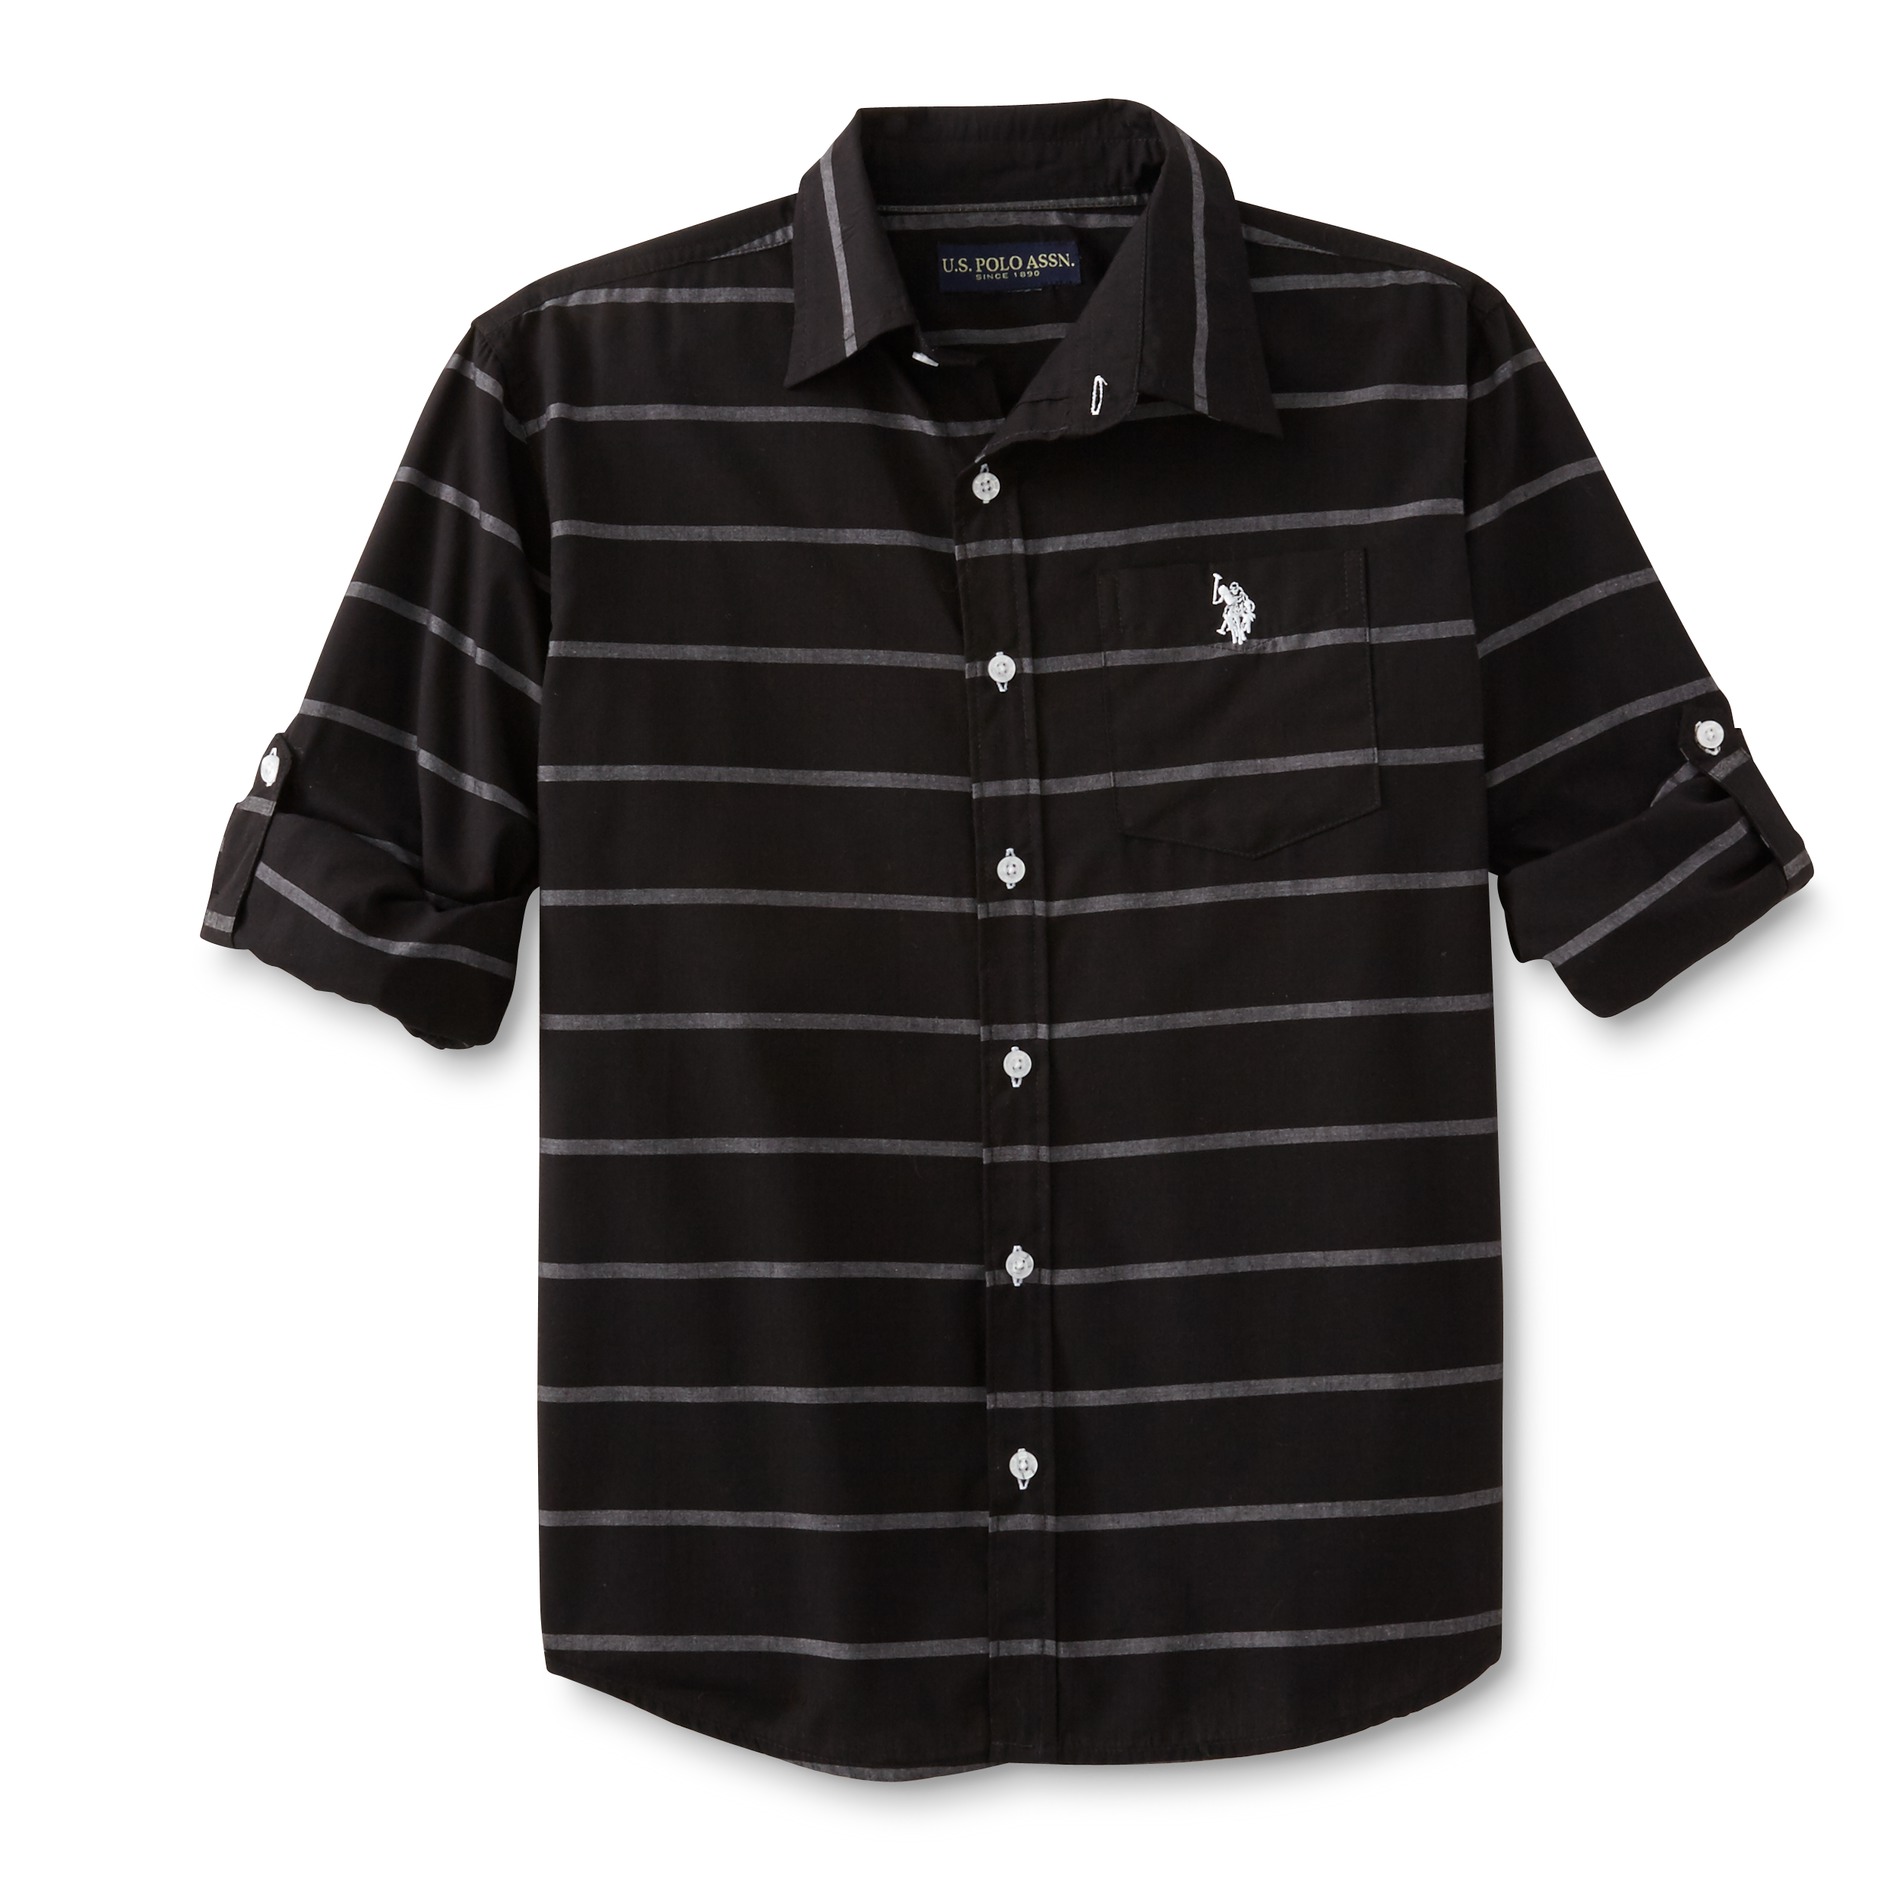 U.S. Polo Assn. Boy's Button-Front Shirt - Striped